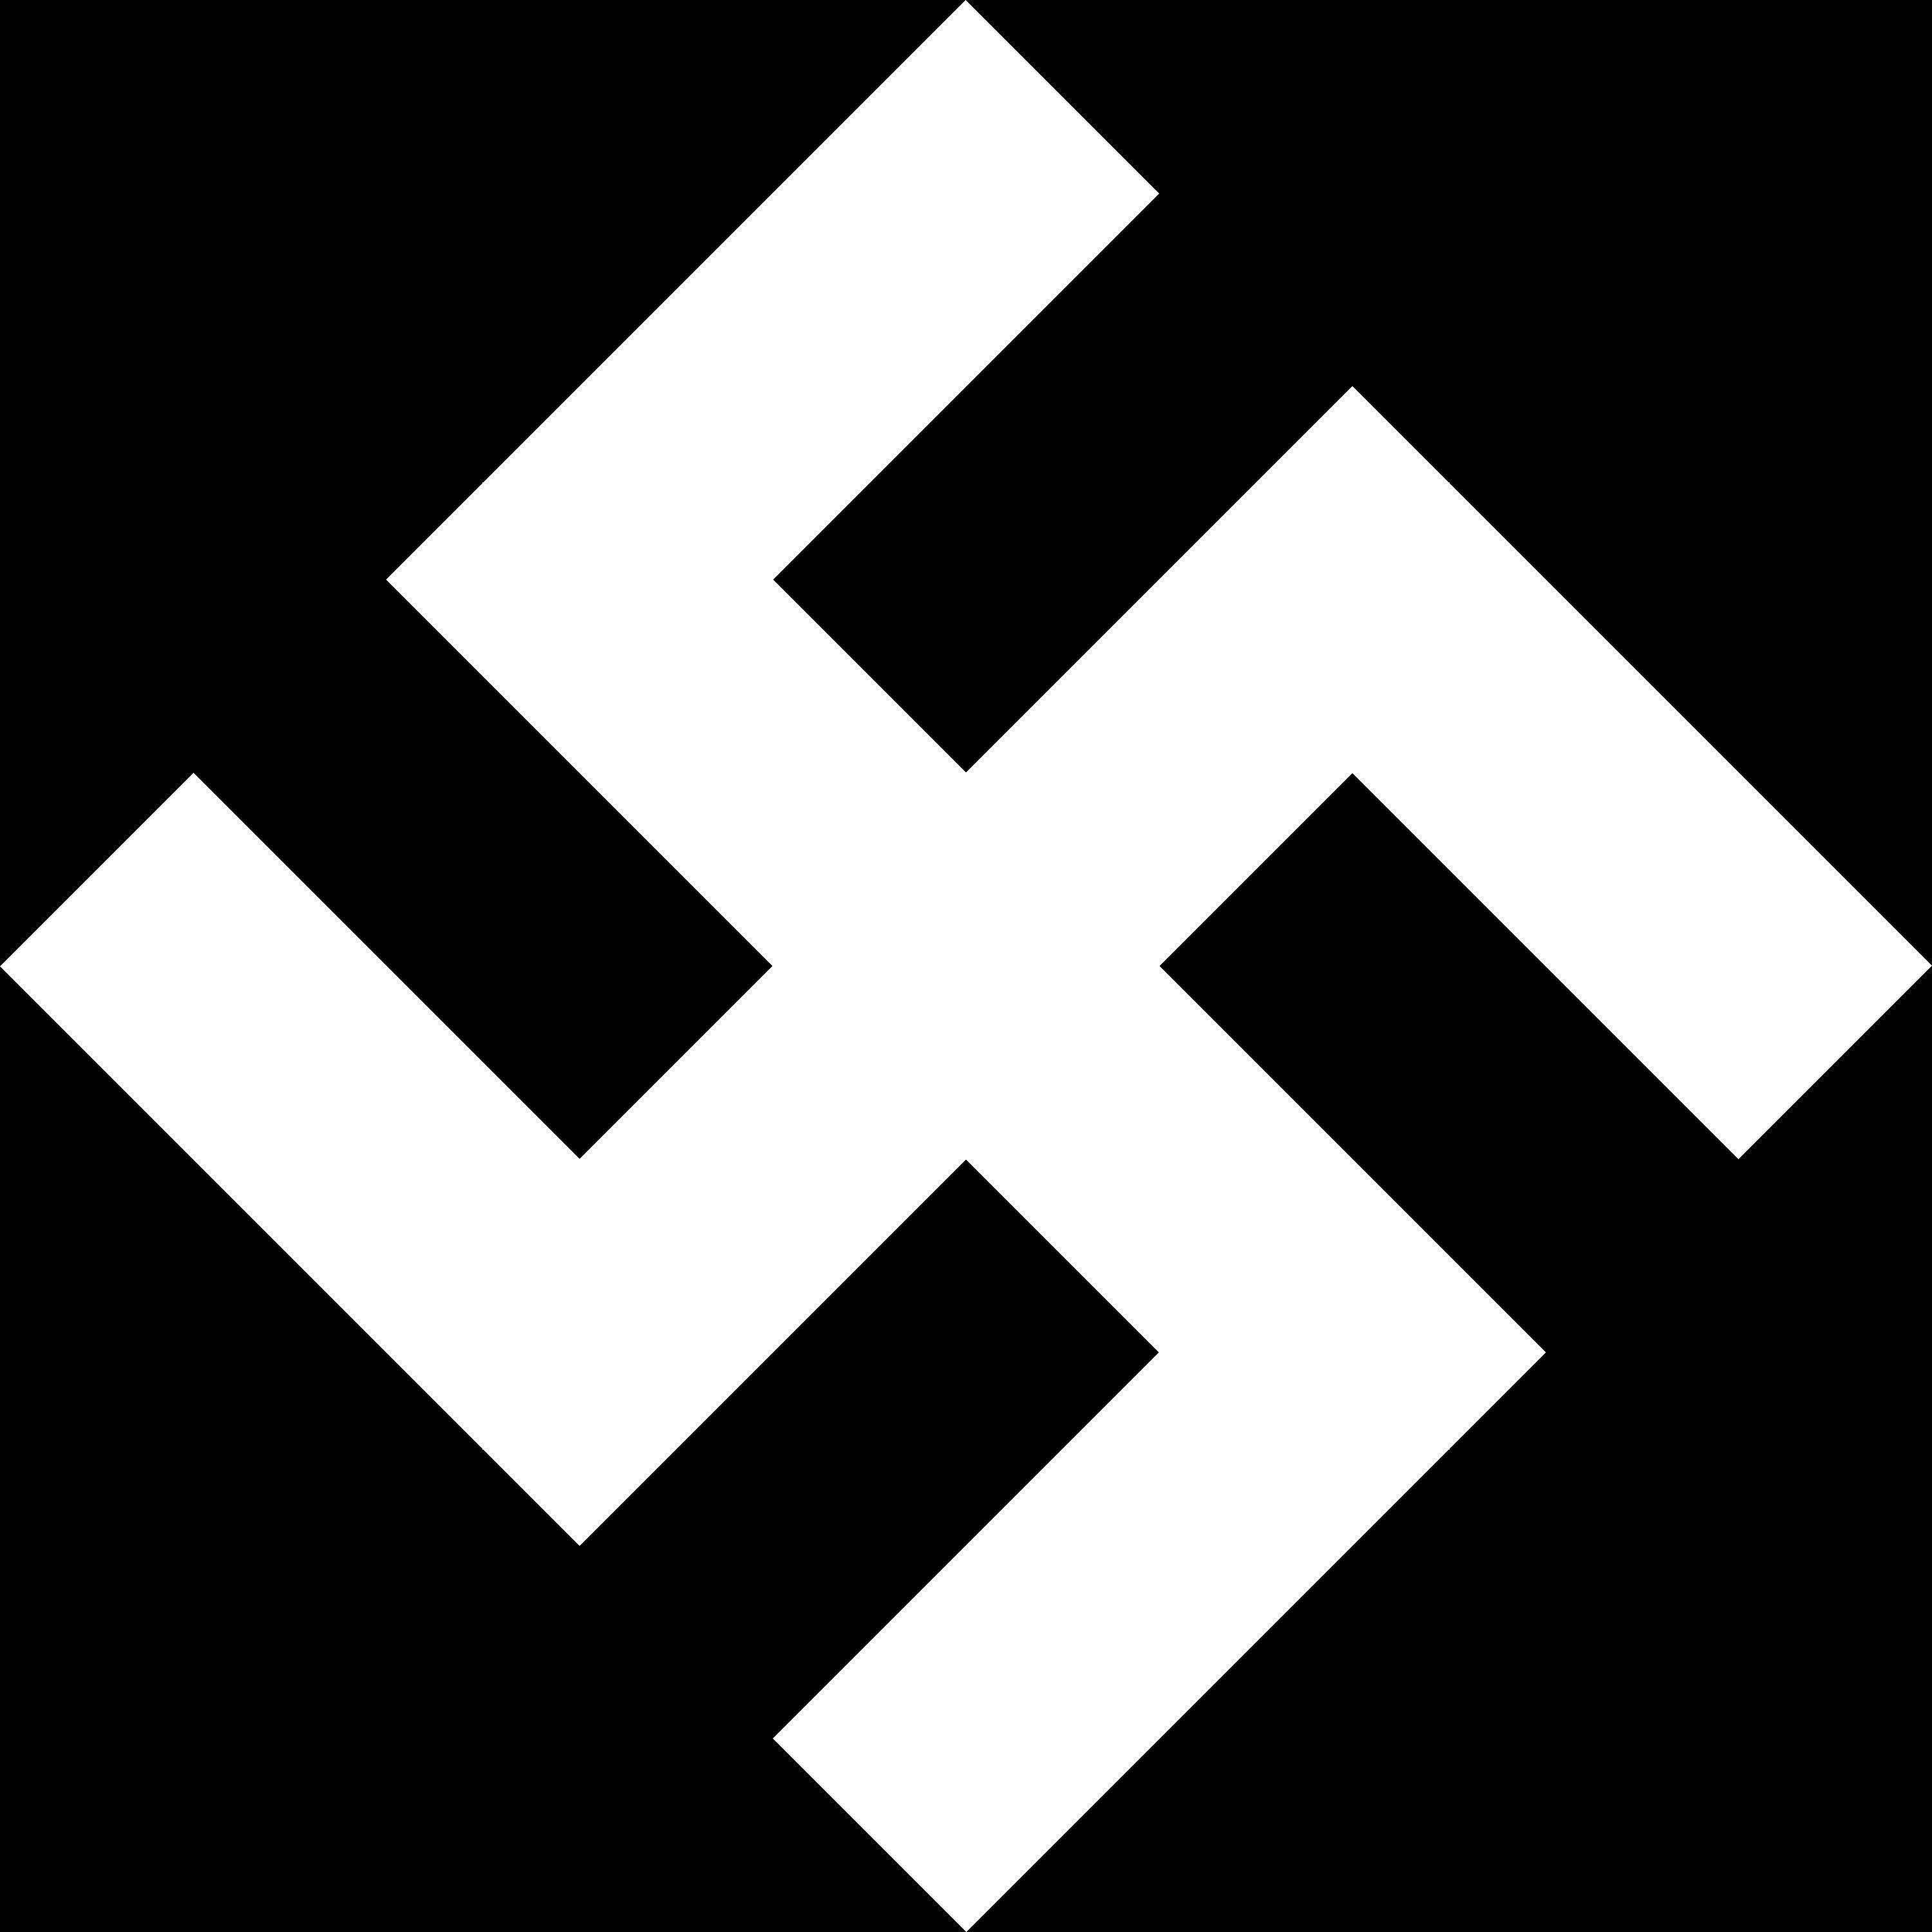 Swastika 20100328 0 by SFeitelson on DeviantArt